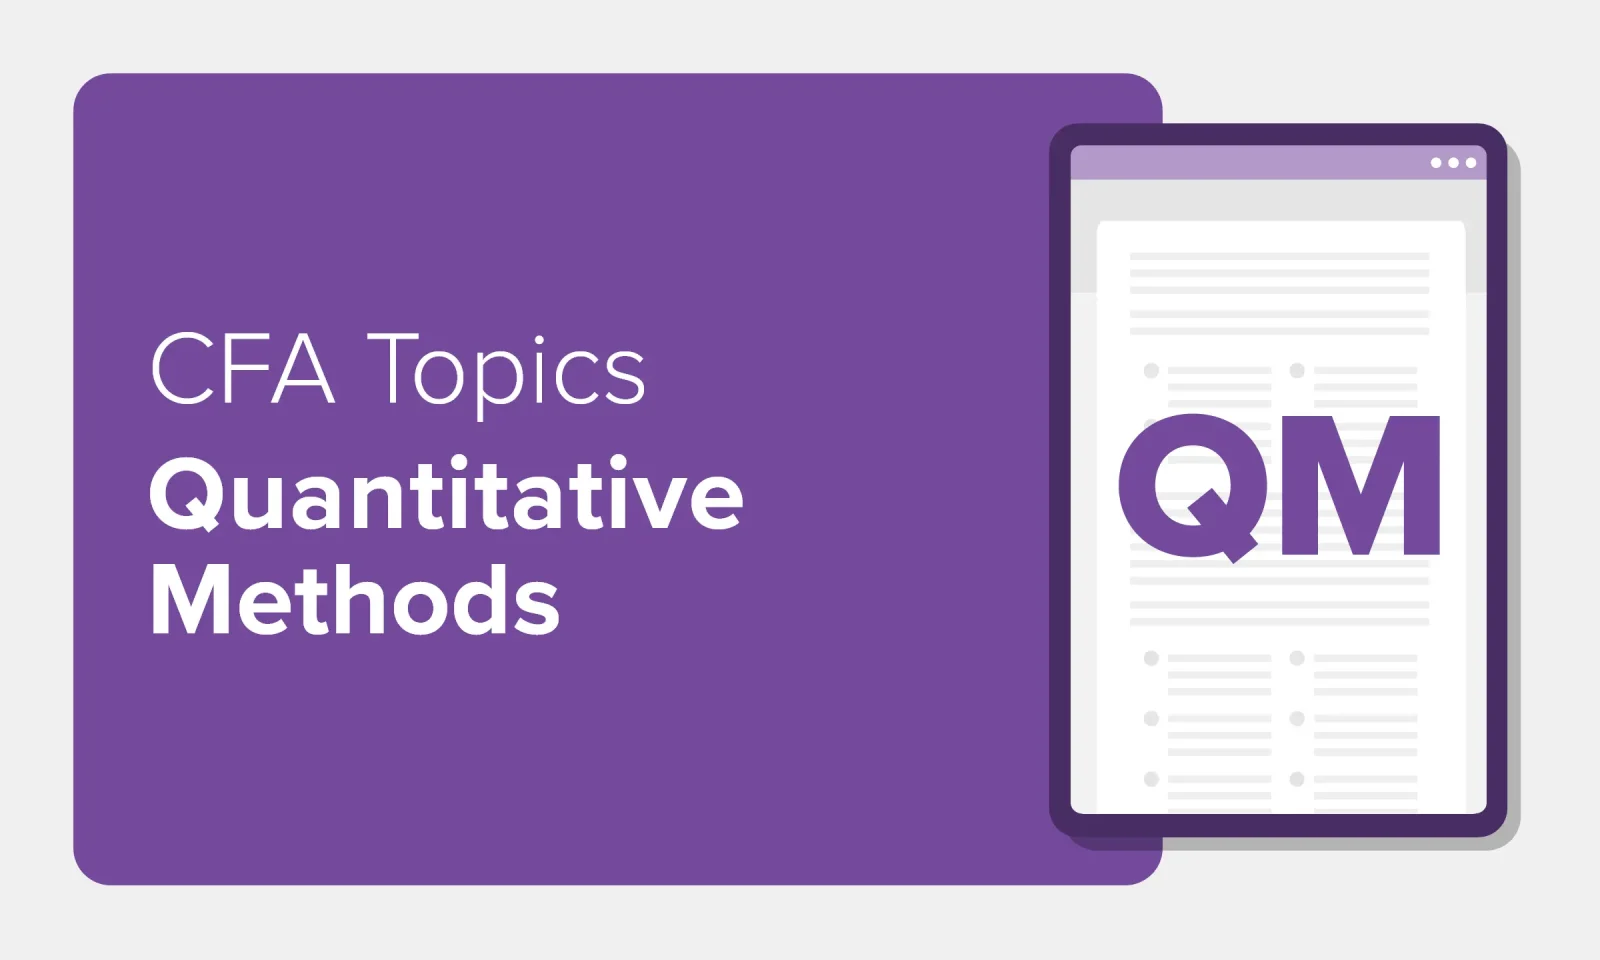 CFA Topics Quantitative Methods